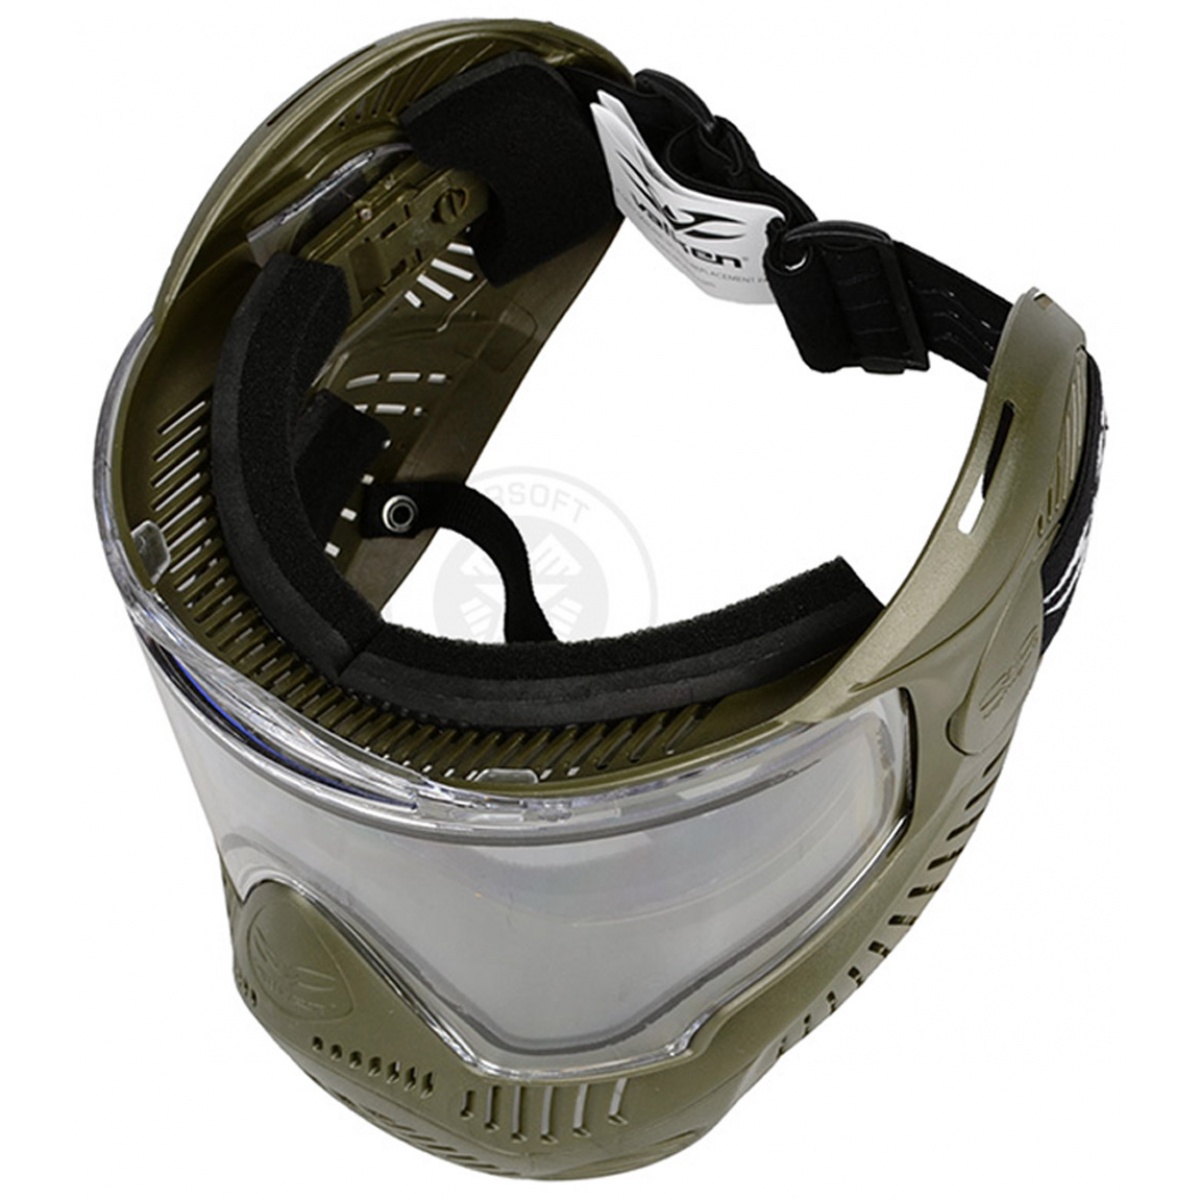 Valken Annex MI-7 Full Face Airsoft Mask w/ Visor - OD GREEN | Airsoft ...